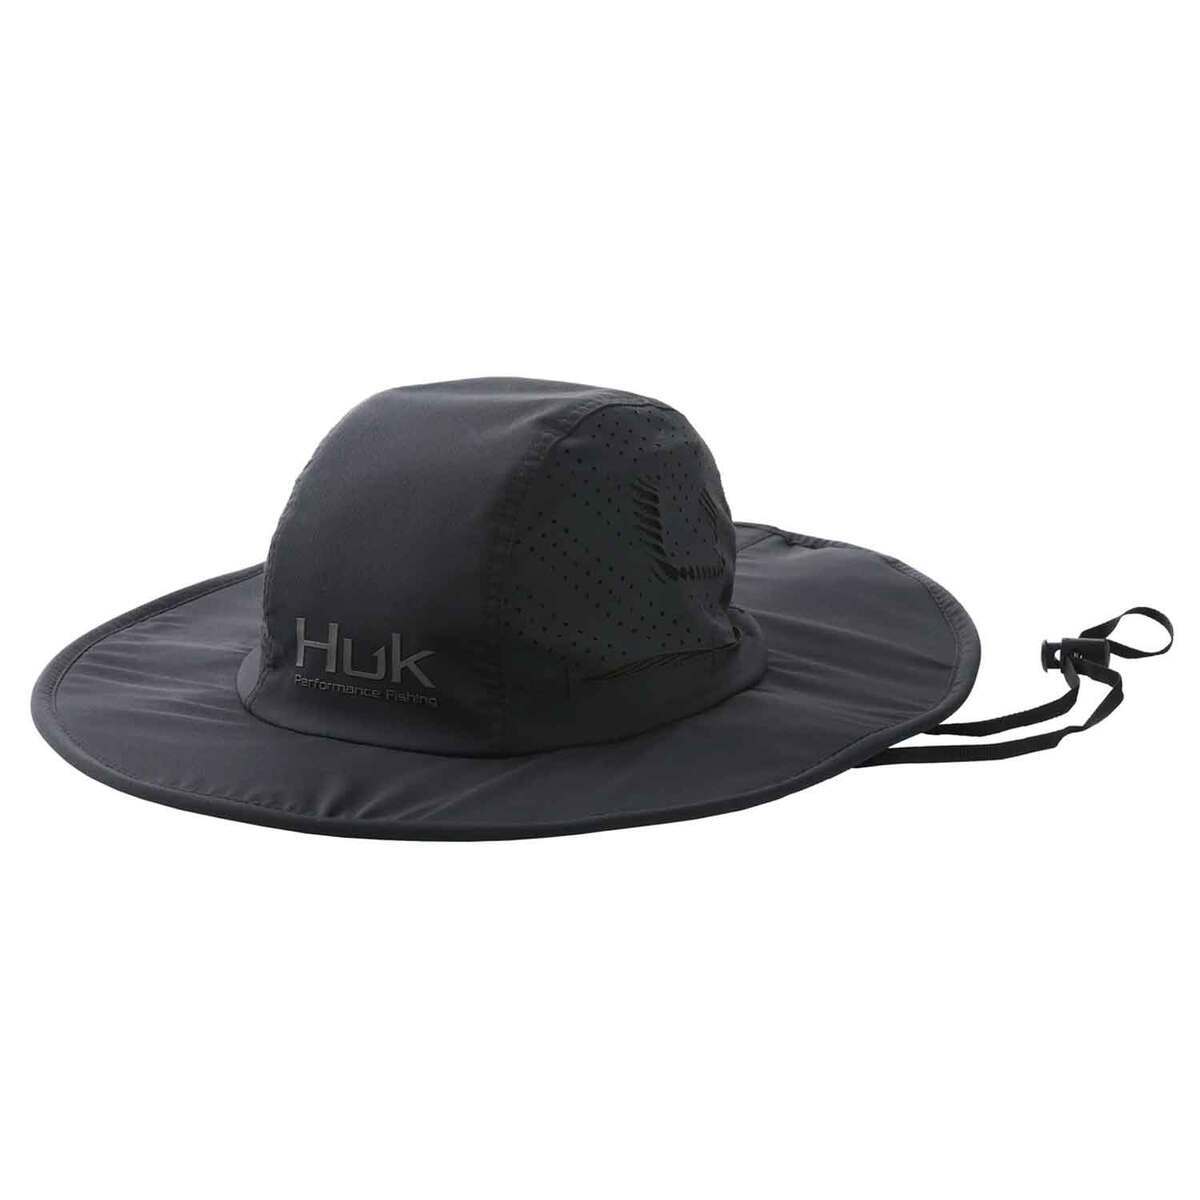 Huk Men's A1A Sun Hat - Black